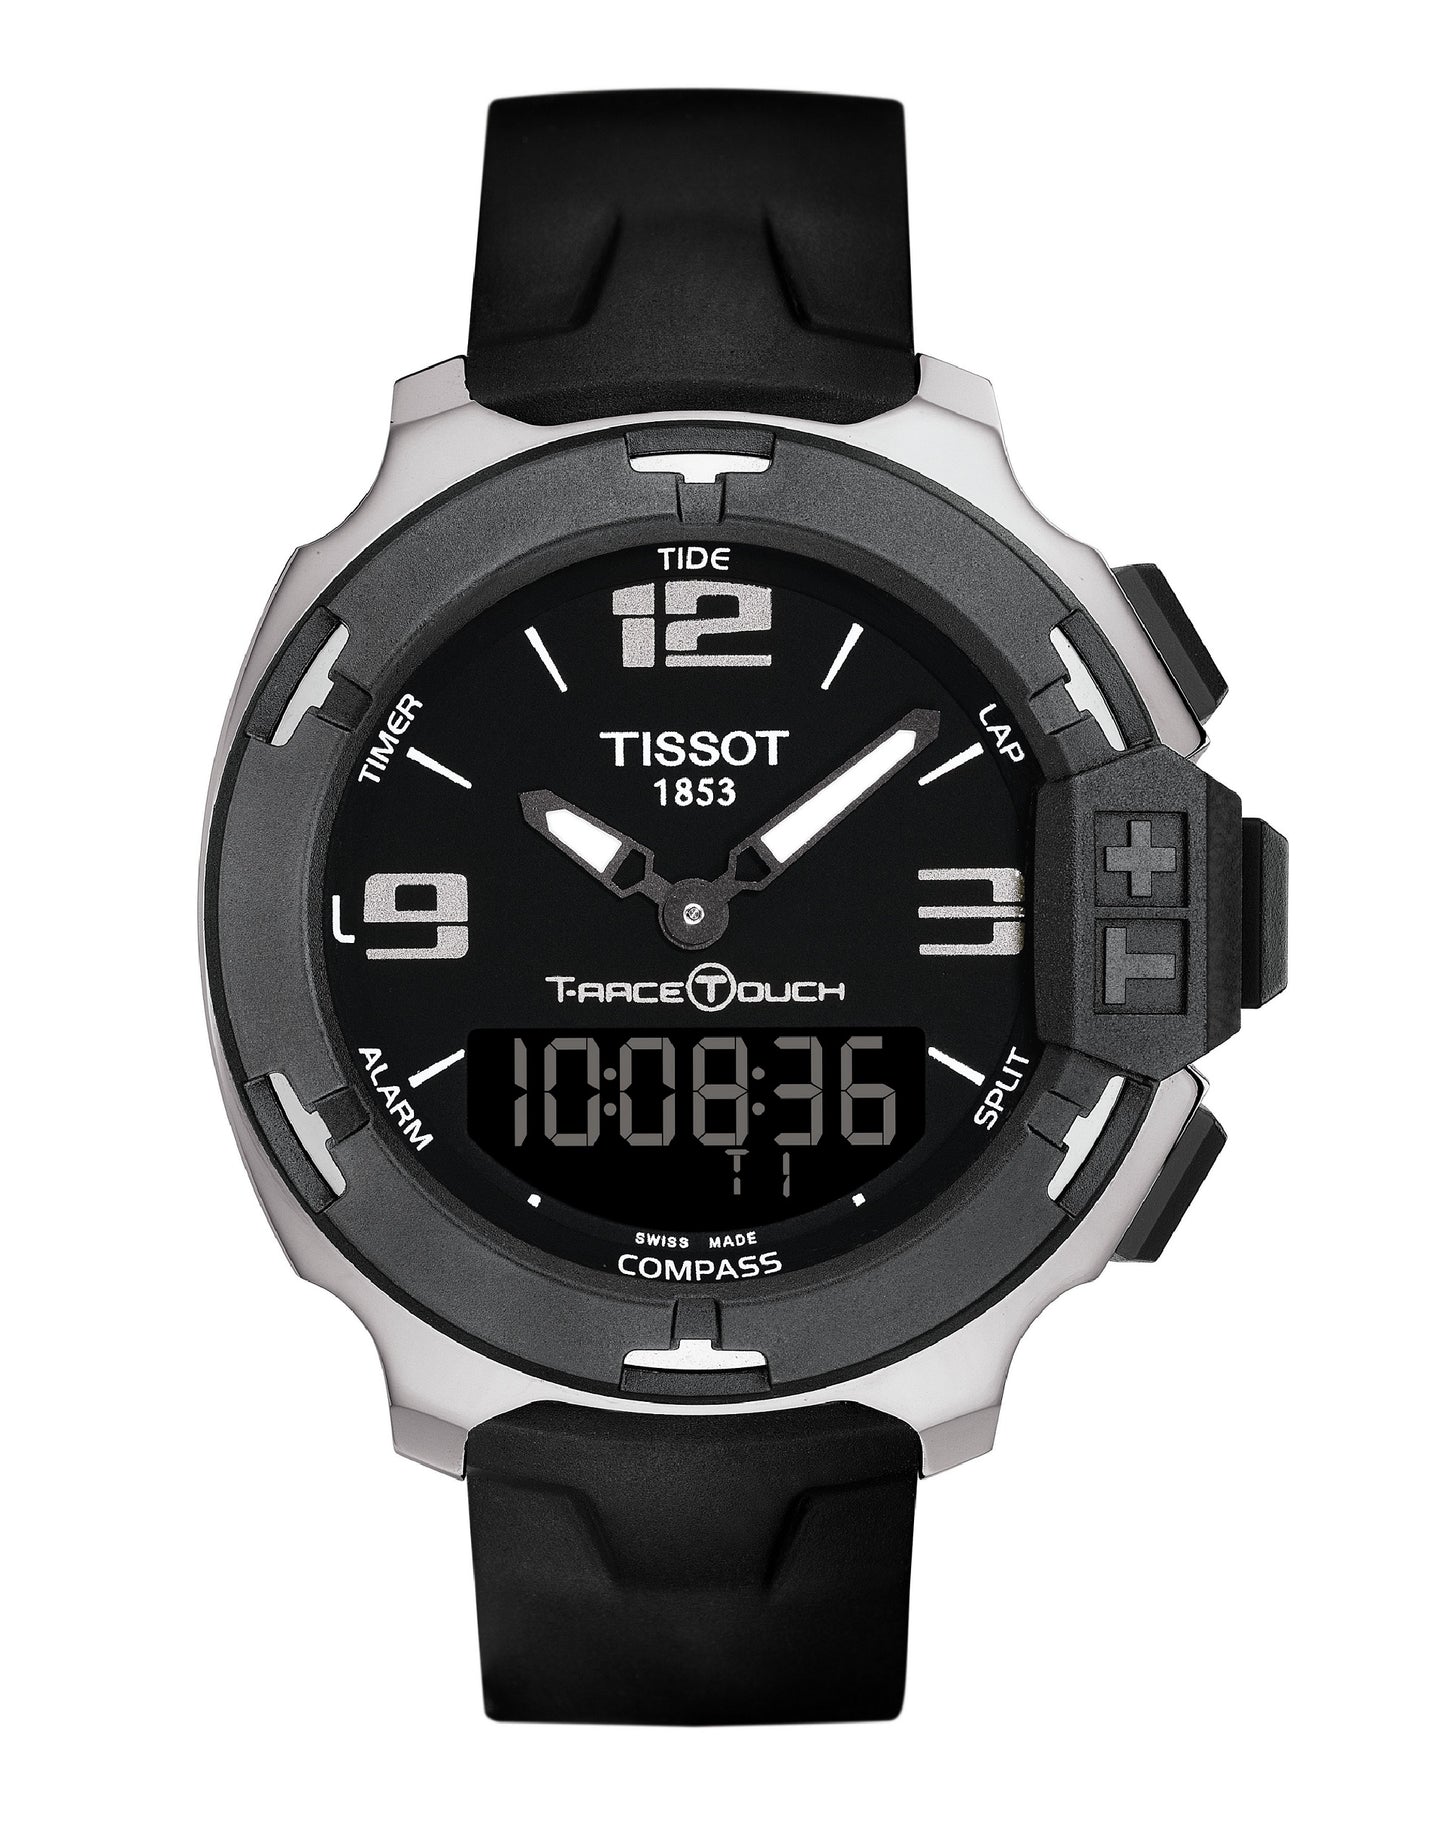 Tissot T081.420.17.057.01 Tissot T-Race Touch Watch